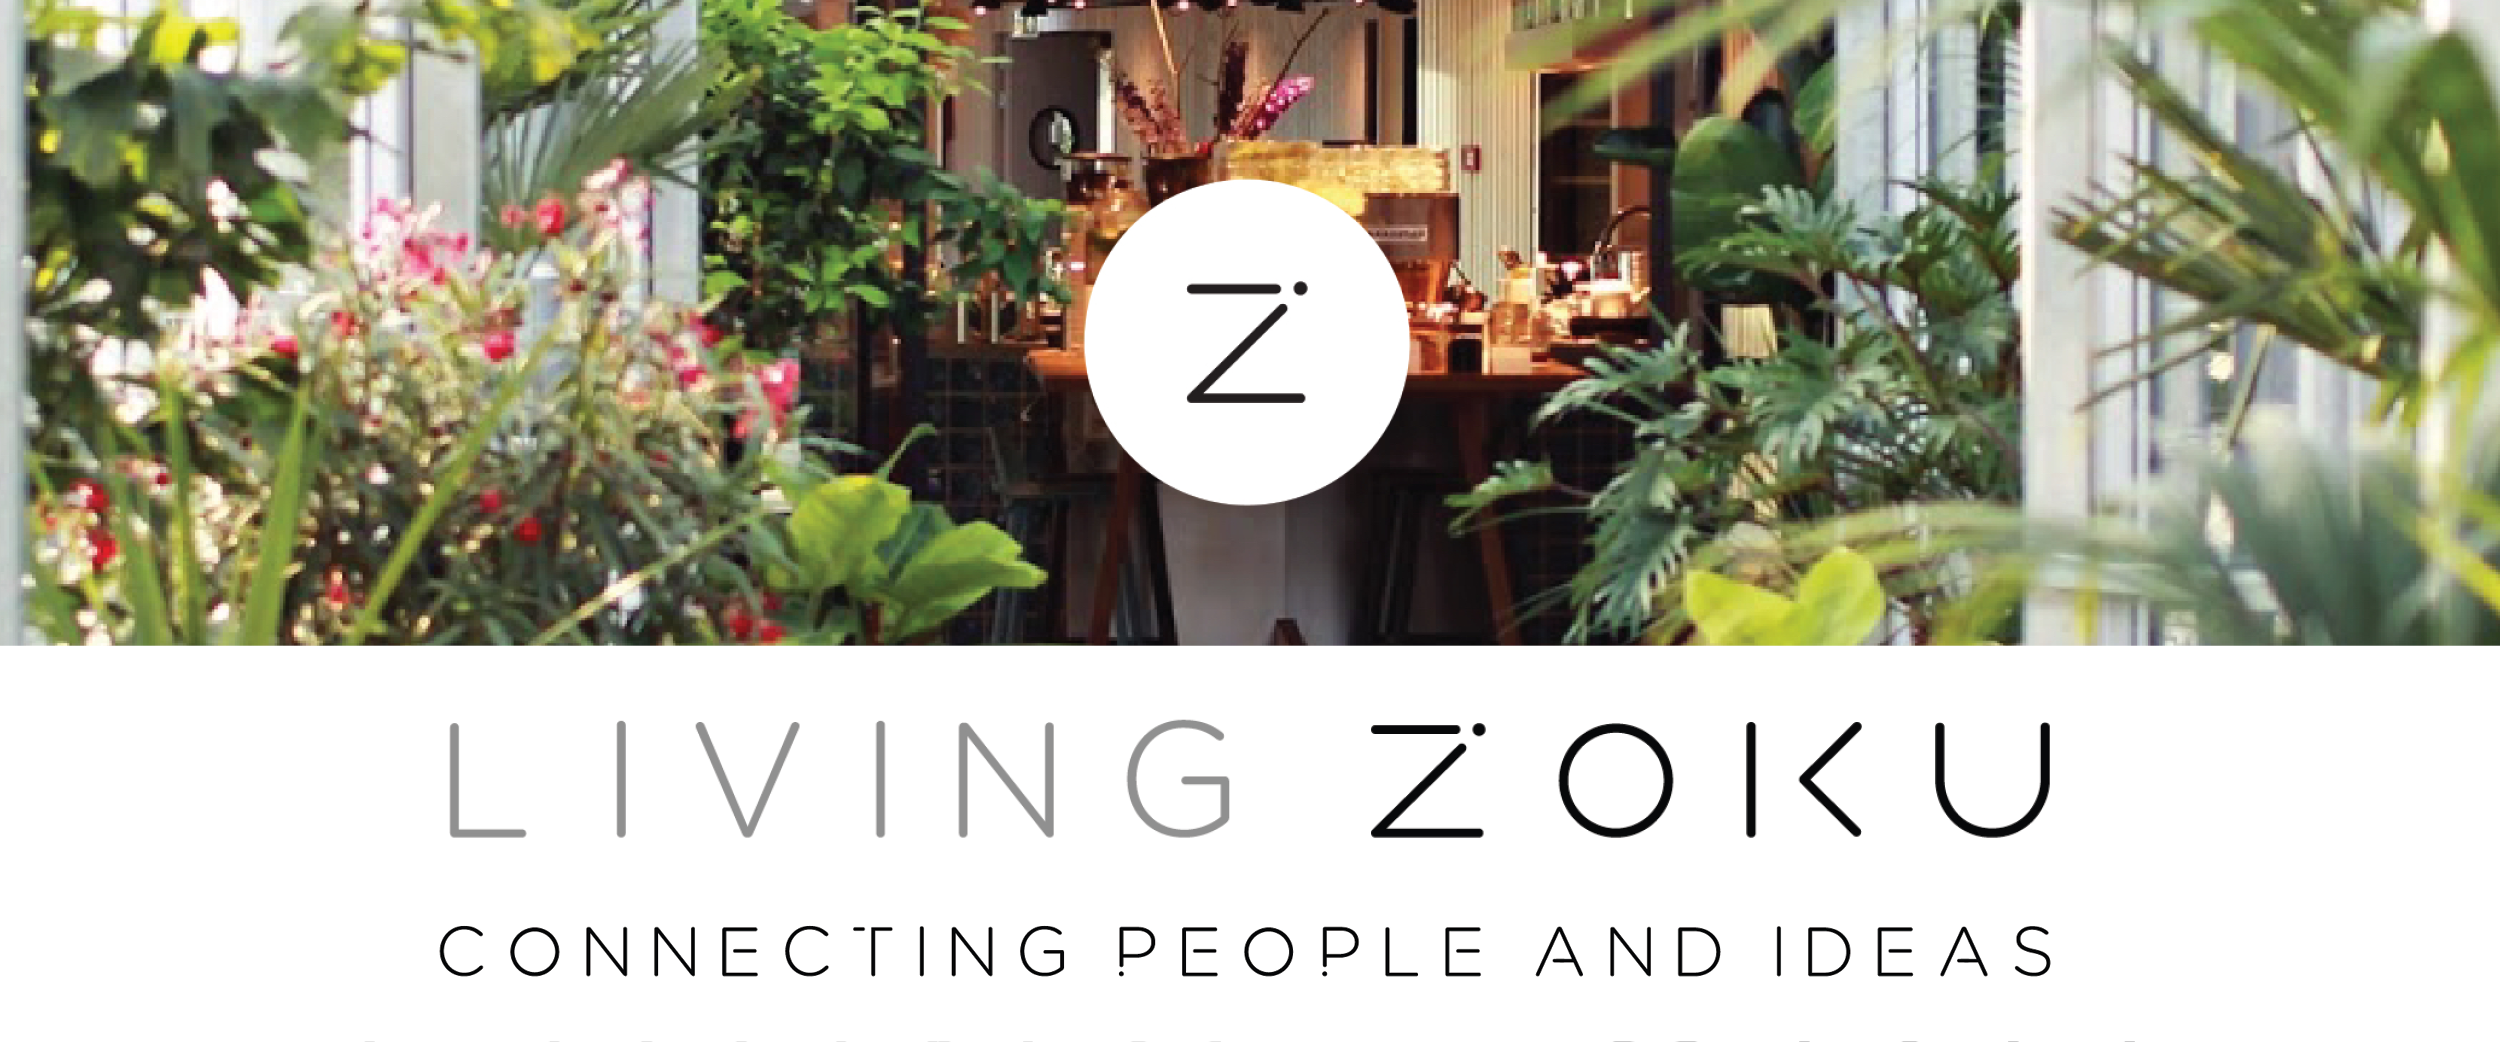 Living Zoku Banner